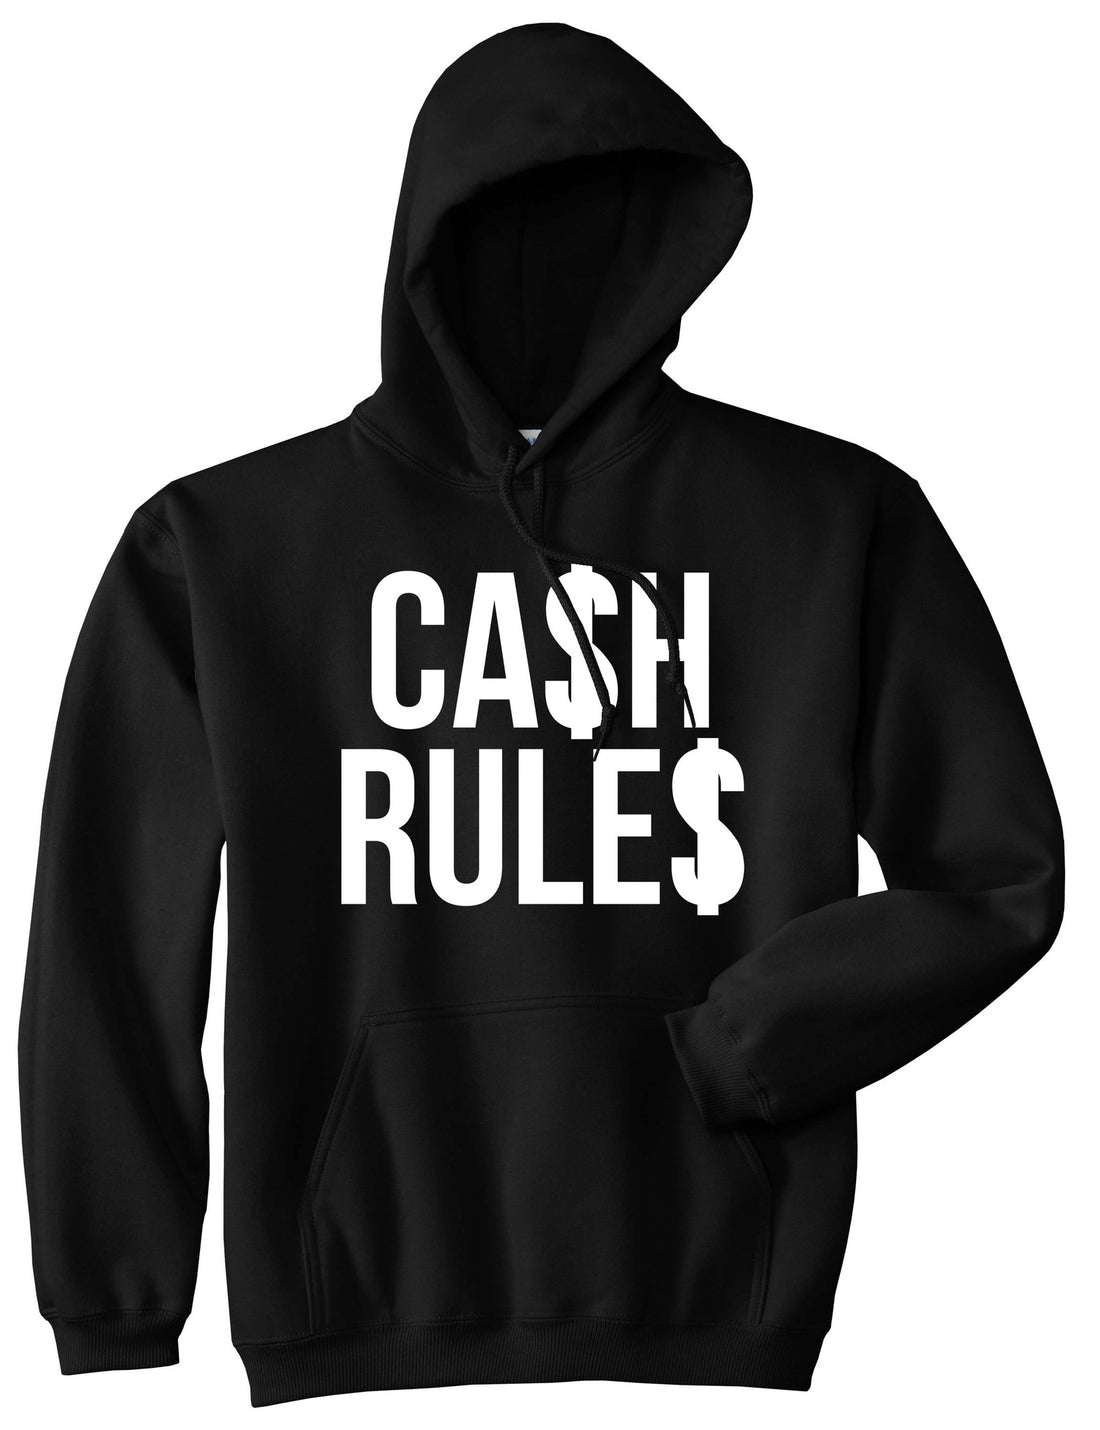 Cash Rules Pullover Hoodie Hoody in Black by Kings Of NY